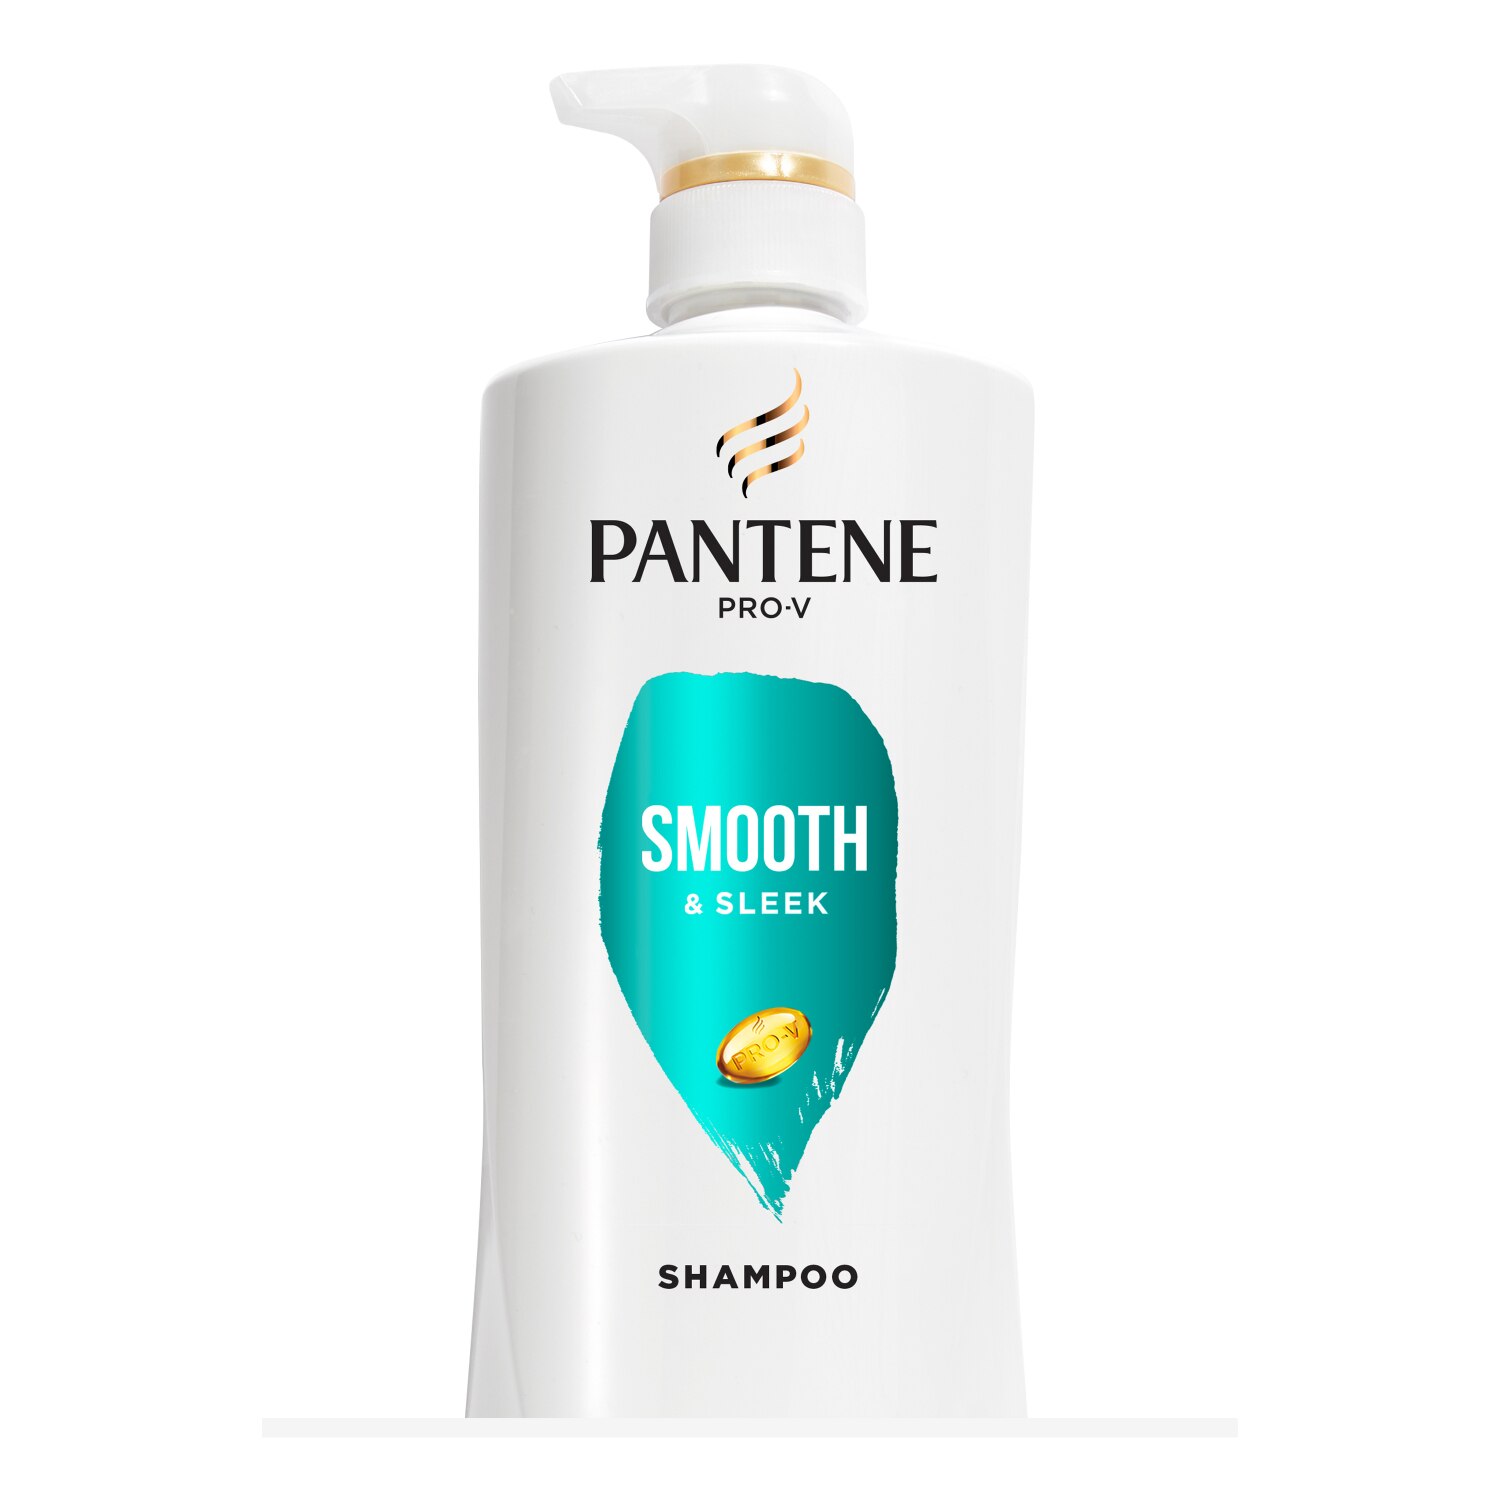 Pantene Pro-V Smooth & Sleek Shampoo, 17.9 Oz , CVS